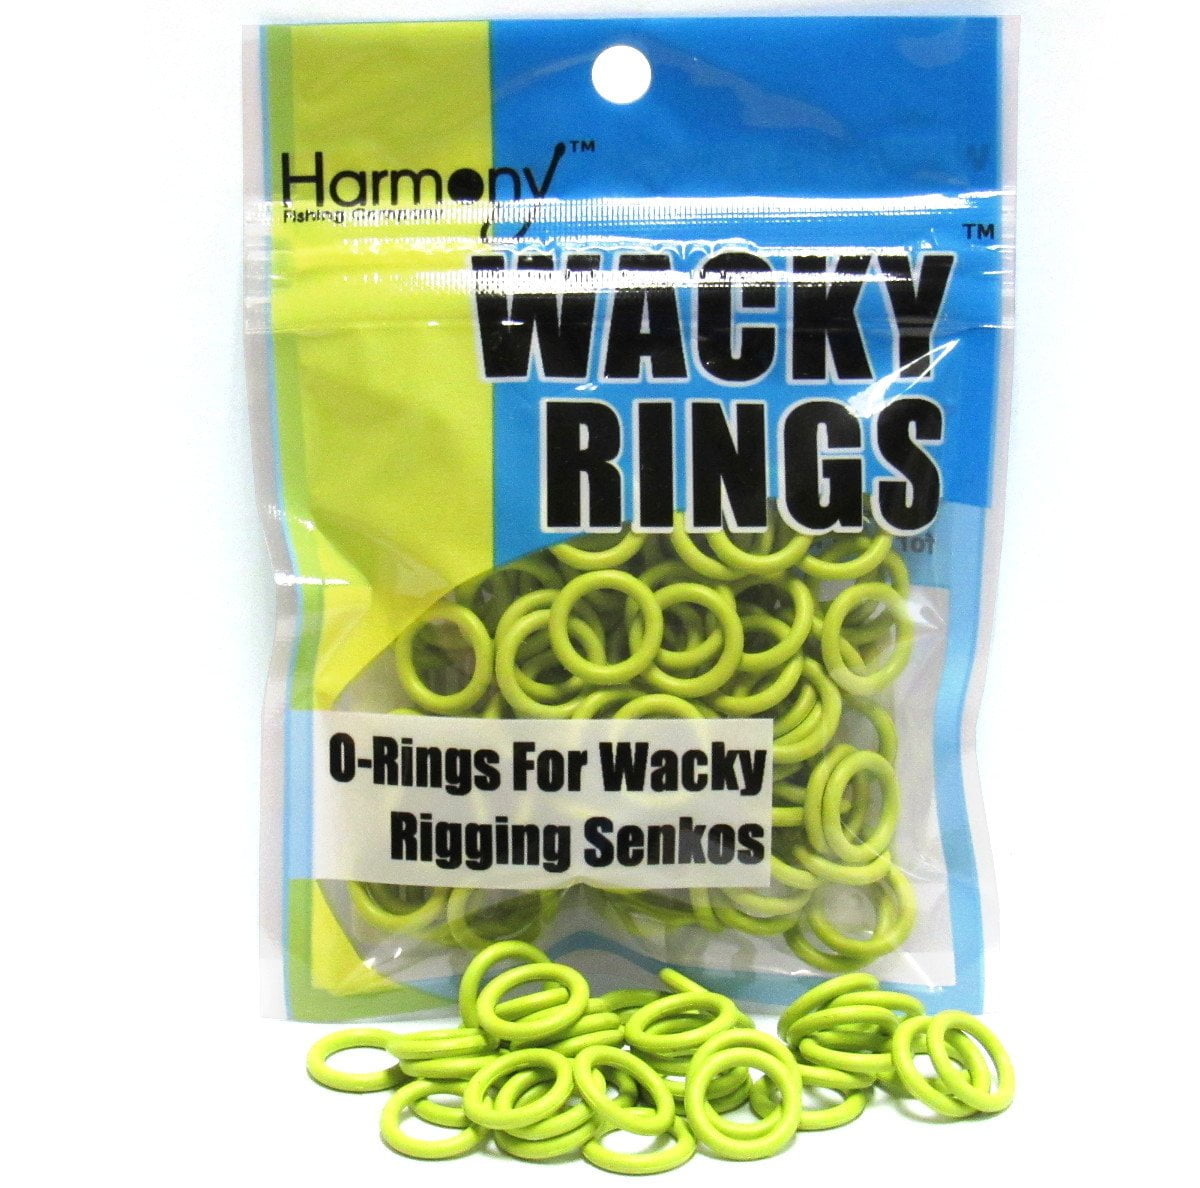 Wacky Rings O-Rings for Wacky Rigging Senko Worms 100 orings